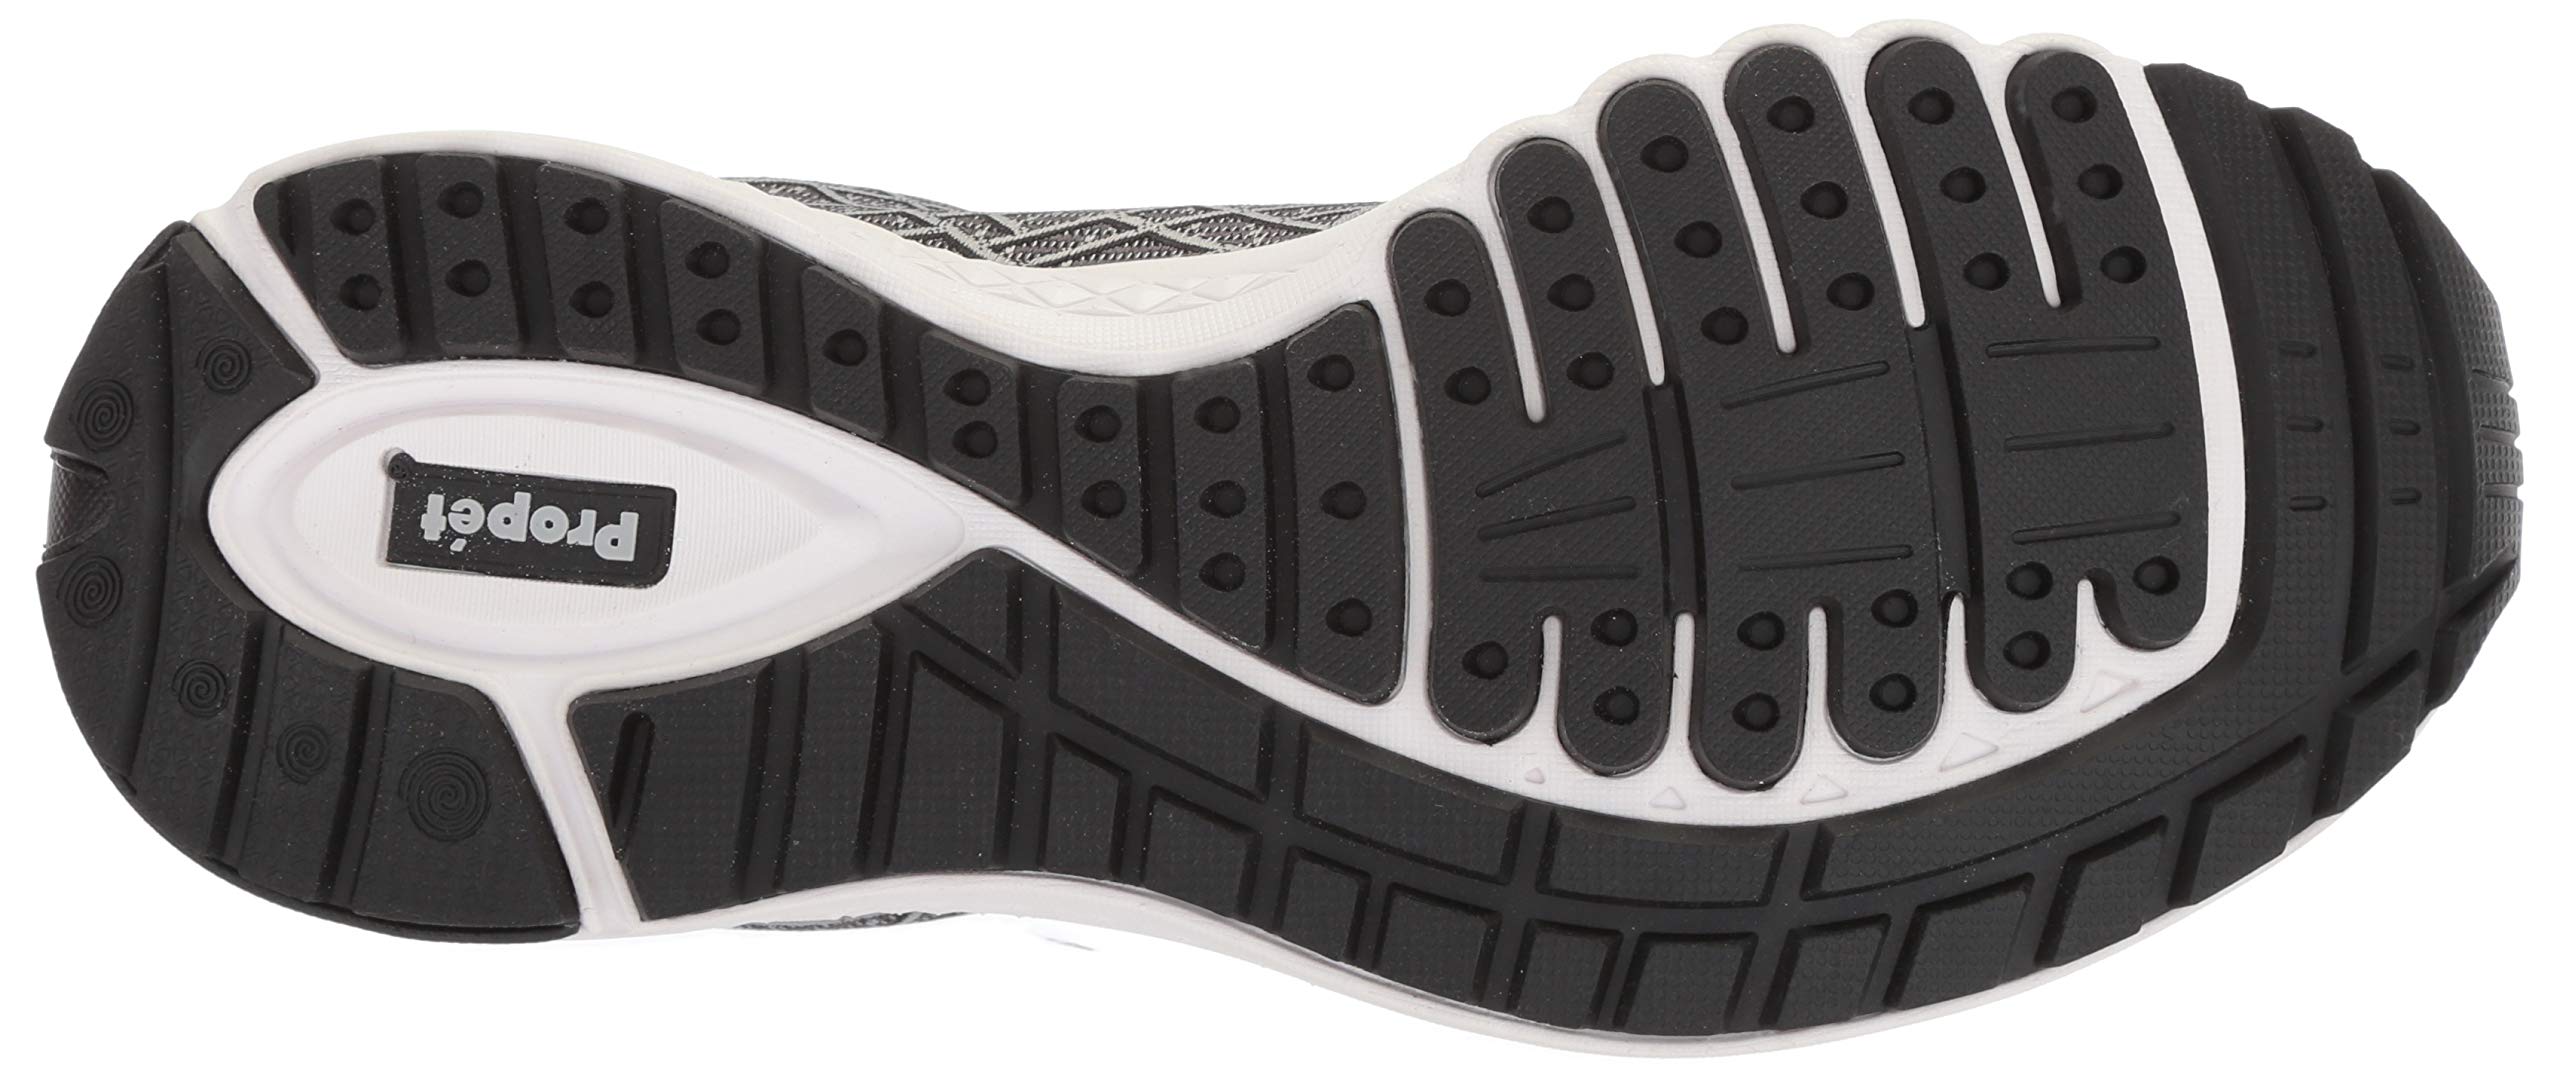 Propet Men's One Running Shoe, black/silver, 7 E US